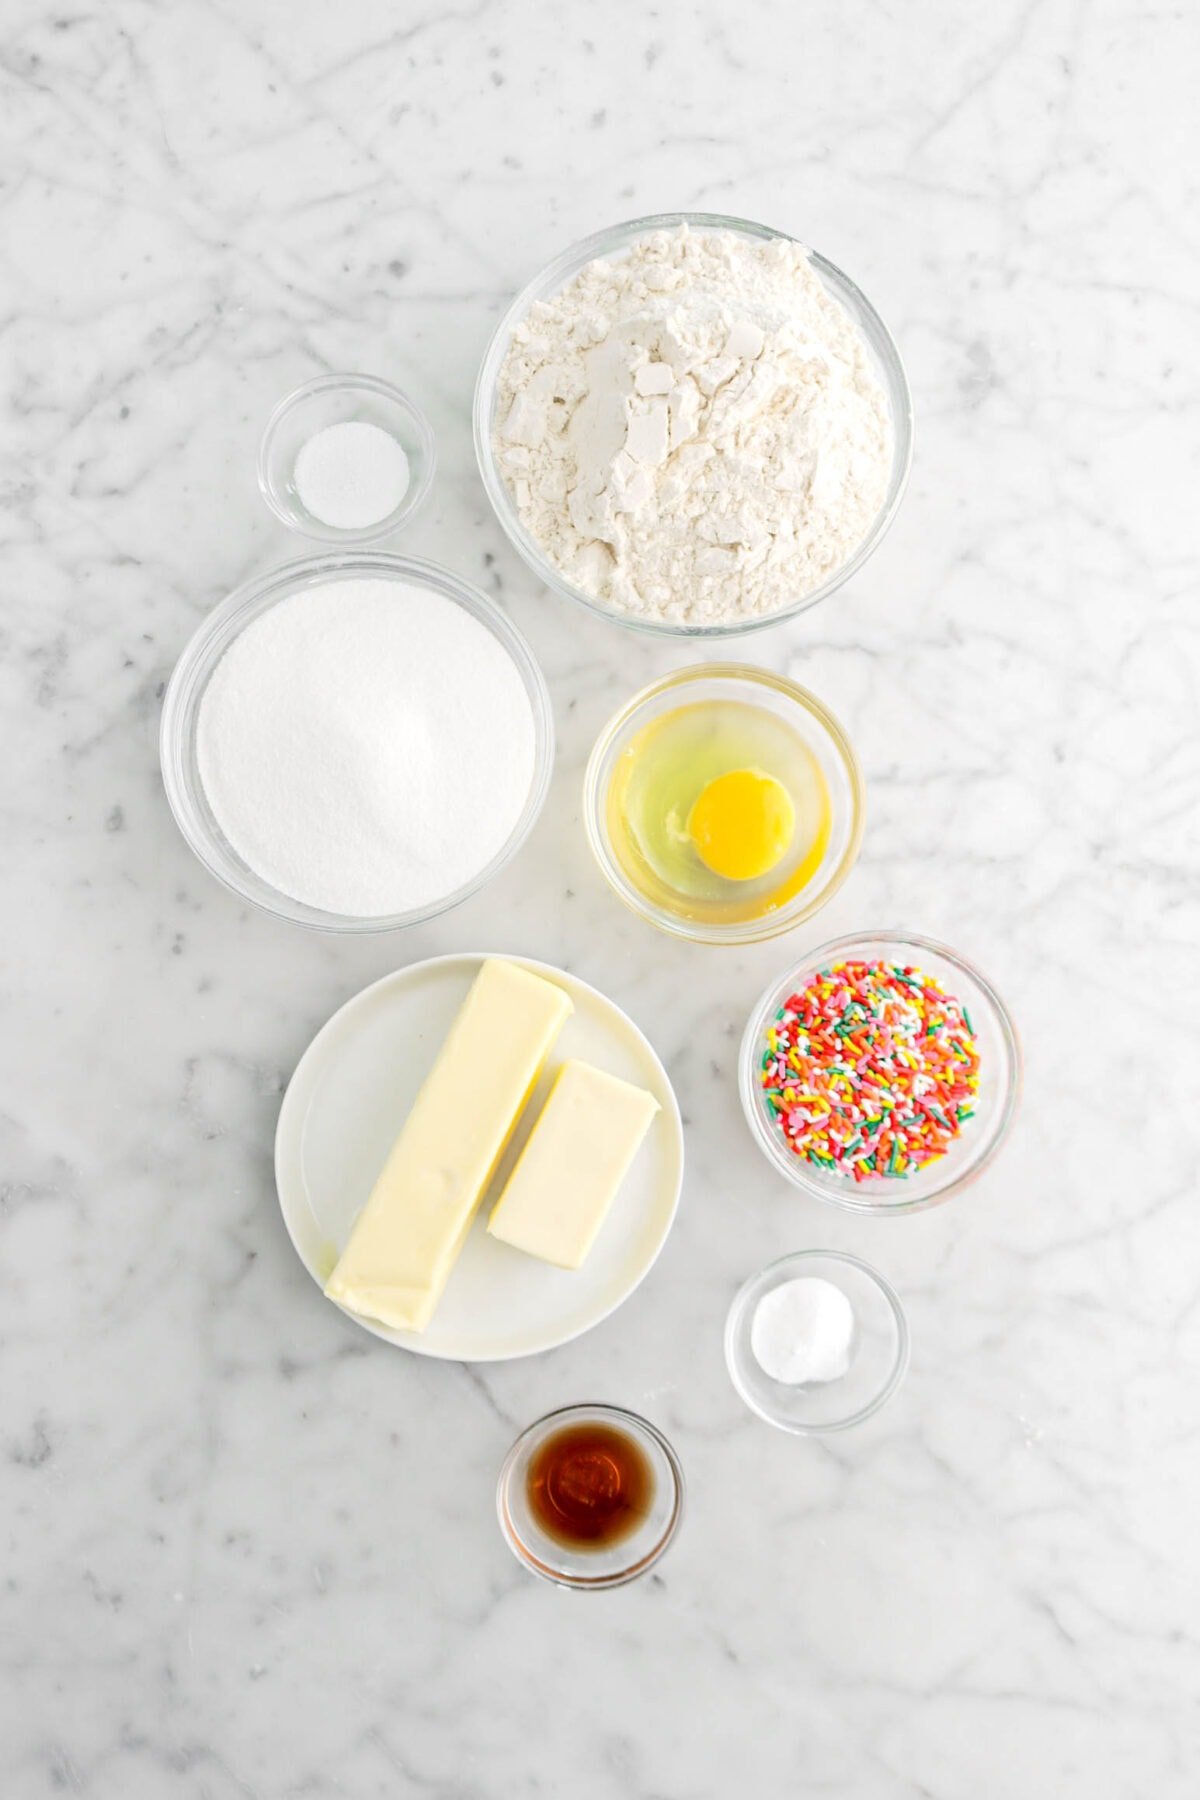 salt, flour, sugar, egg, sprinkles, butter, baking soda, and vanilla on marble surface